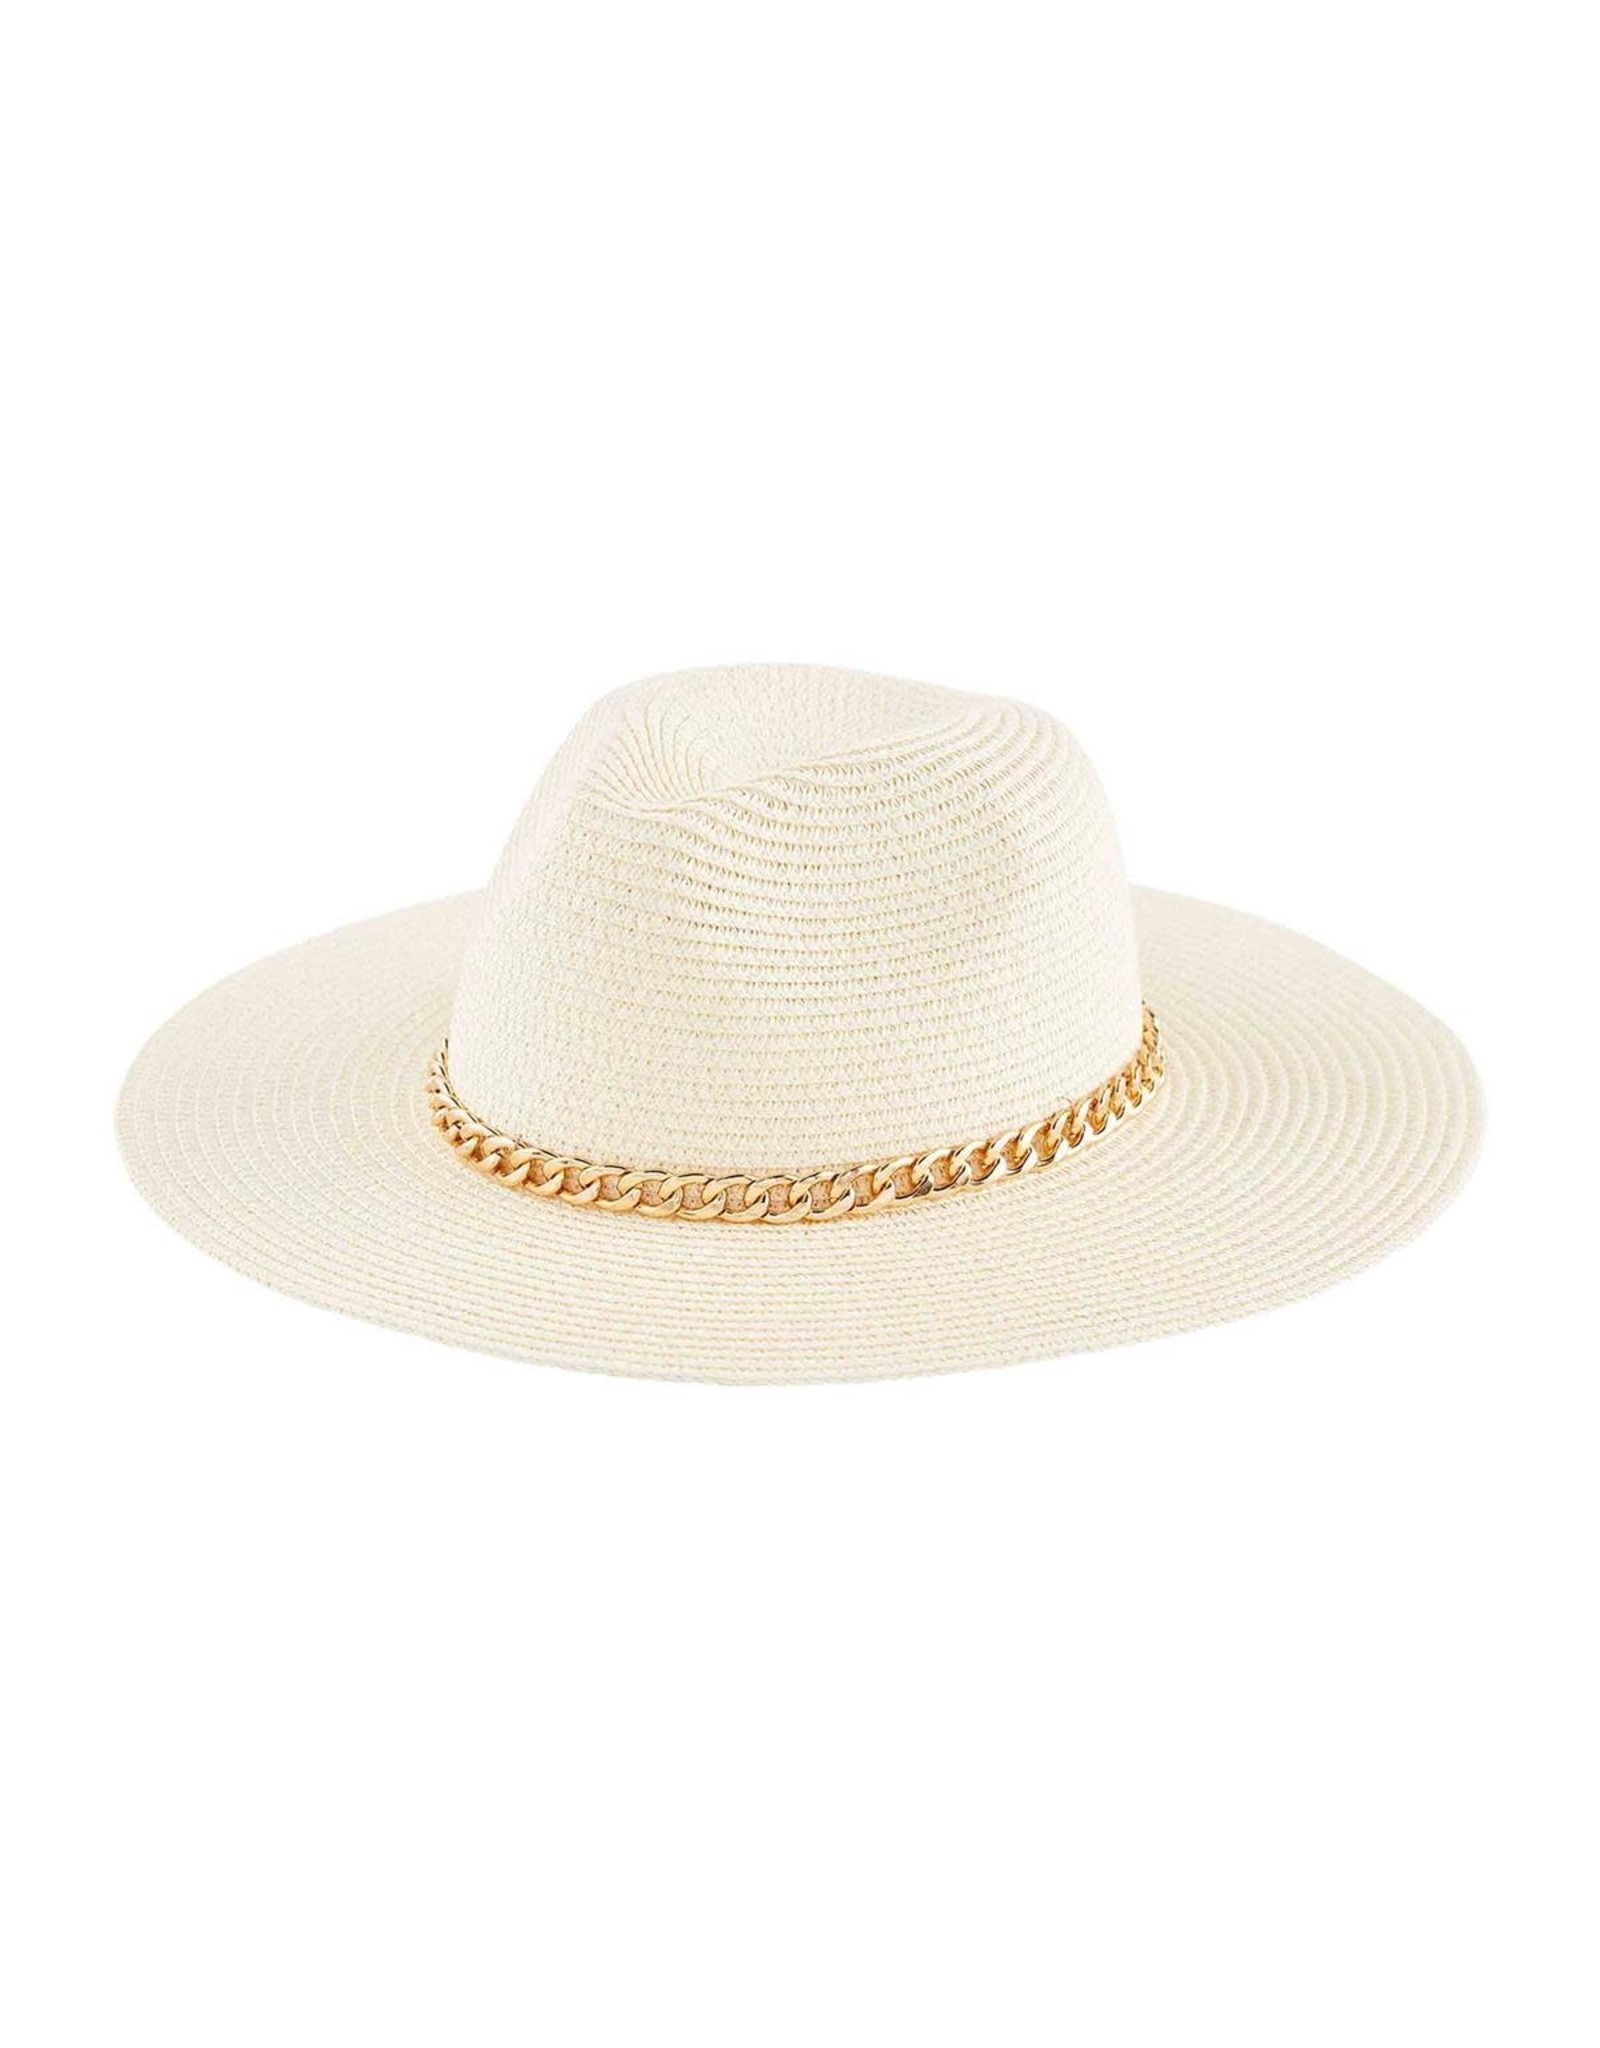 Mud Pie Women's Hats | Gold Chain Fedora In Cream